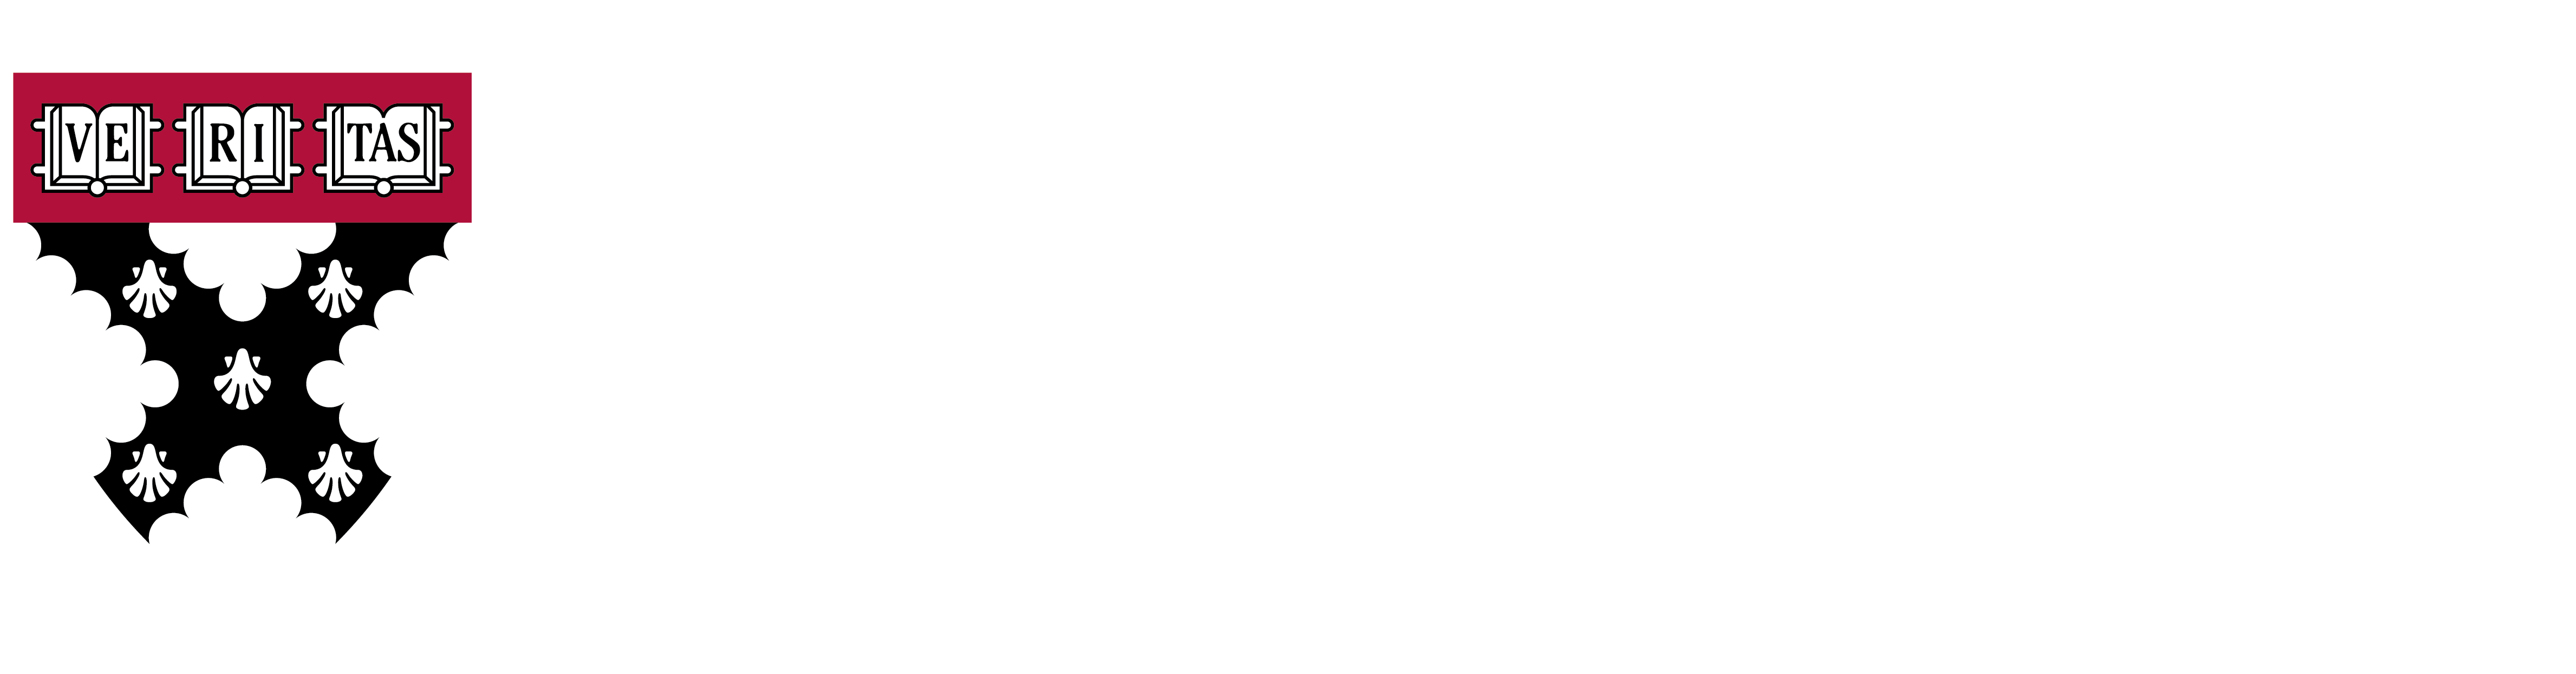 Harvard business school women's association